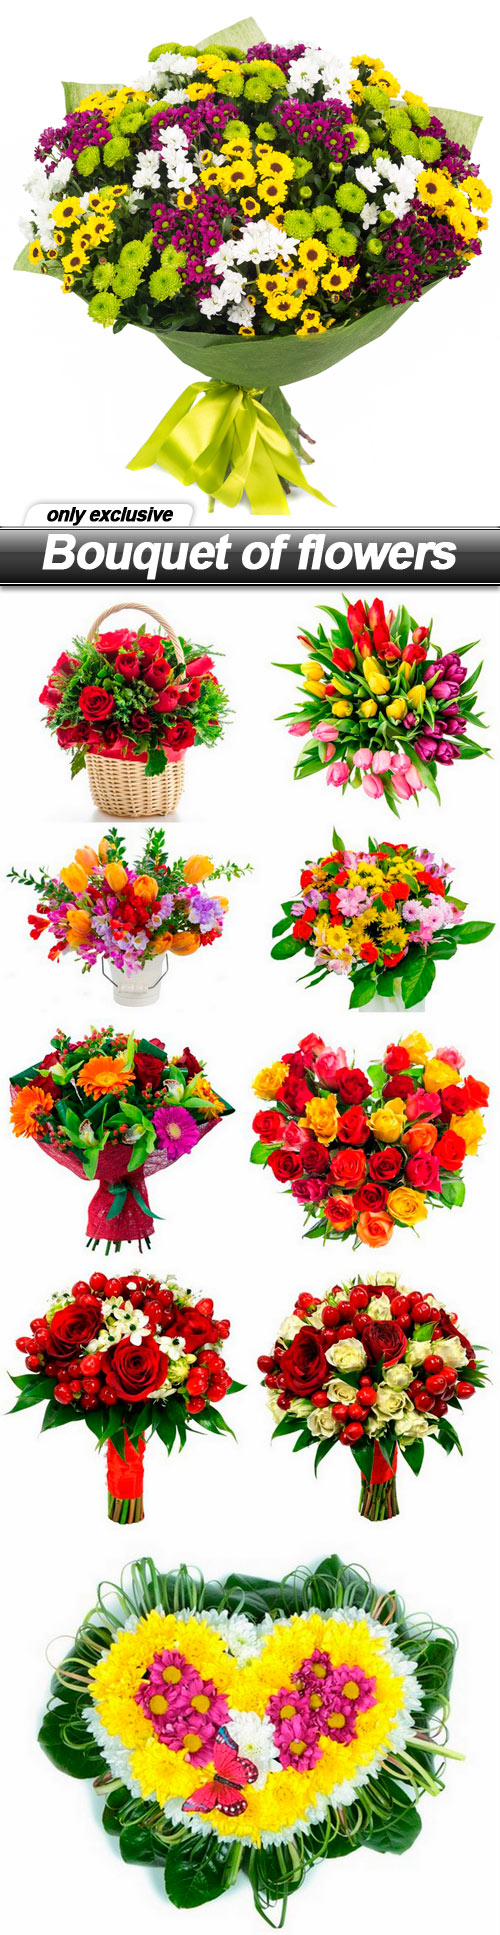 Bouquet of flowers - 10 UHQ JPEG